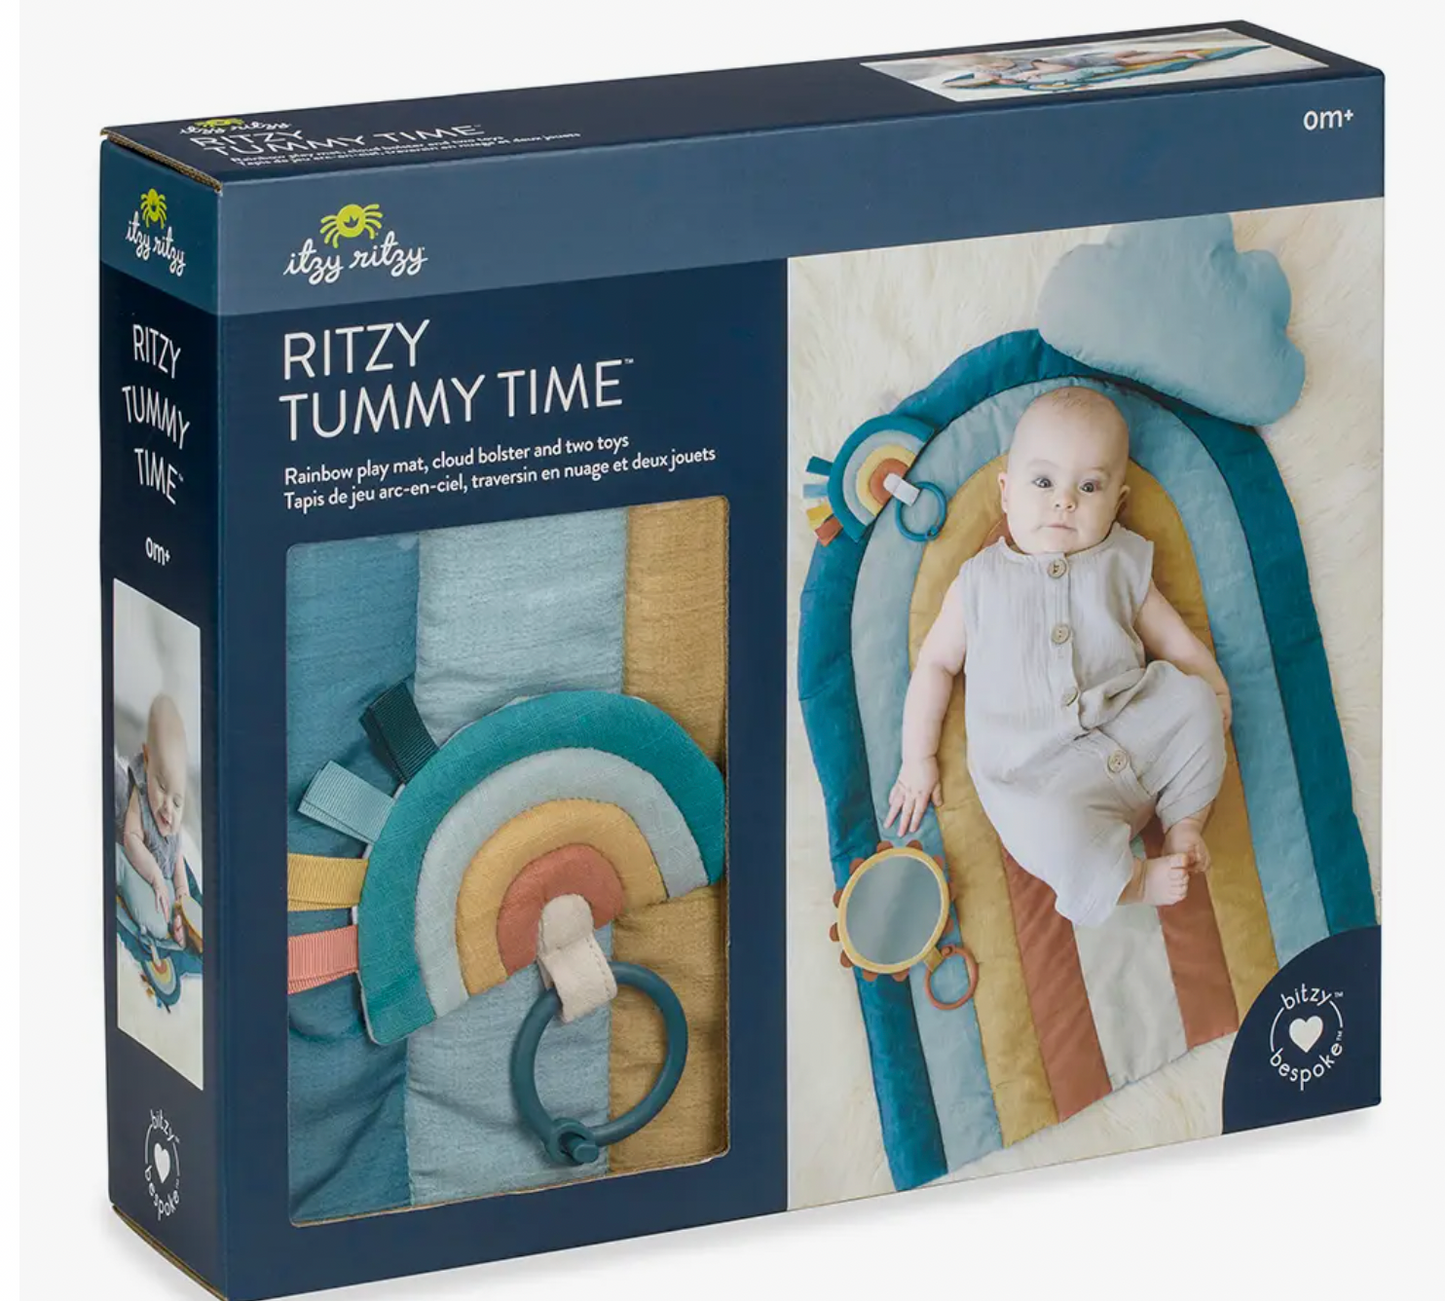 Ritzy Tummy Time Rainbow Play Mat